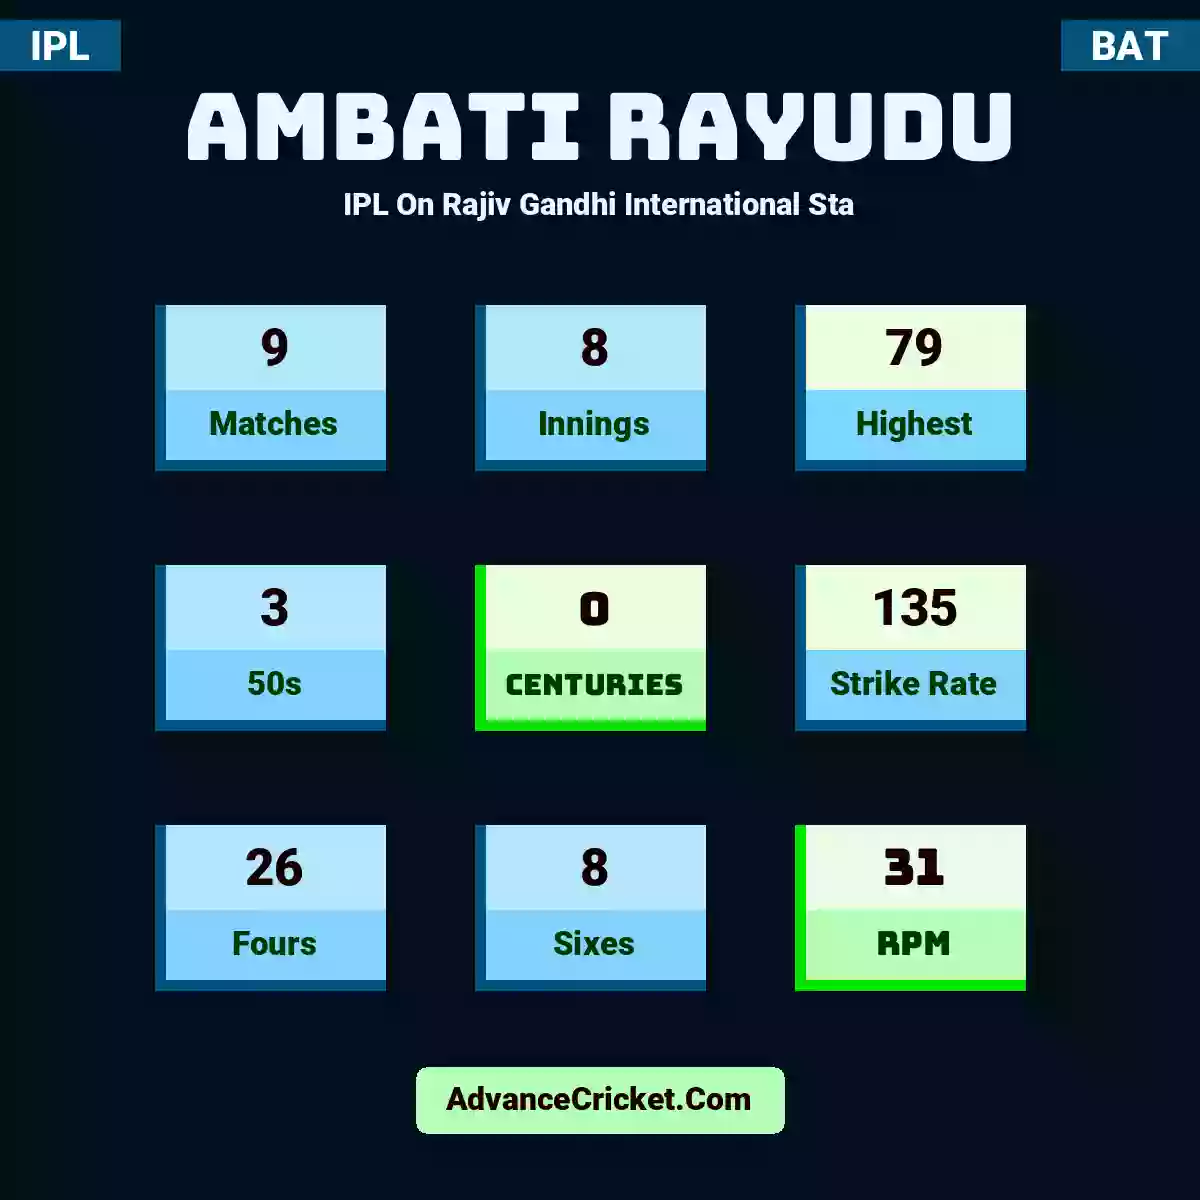 Ambati Rayudu IPL  On Rajiv Gandhi International Sta, Ambati Rayudu played 9 matches, scored 79 runs as highest, 3 half-centuries, and 0 centuries, with a strike rate of 135. A.Rayudu hit 26 fours and 8 sixes, with an RPM of 31.